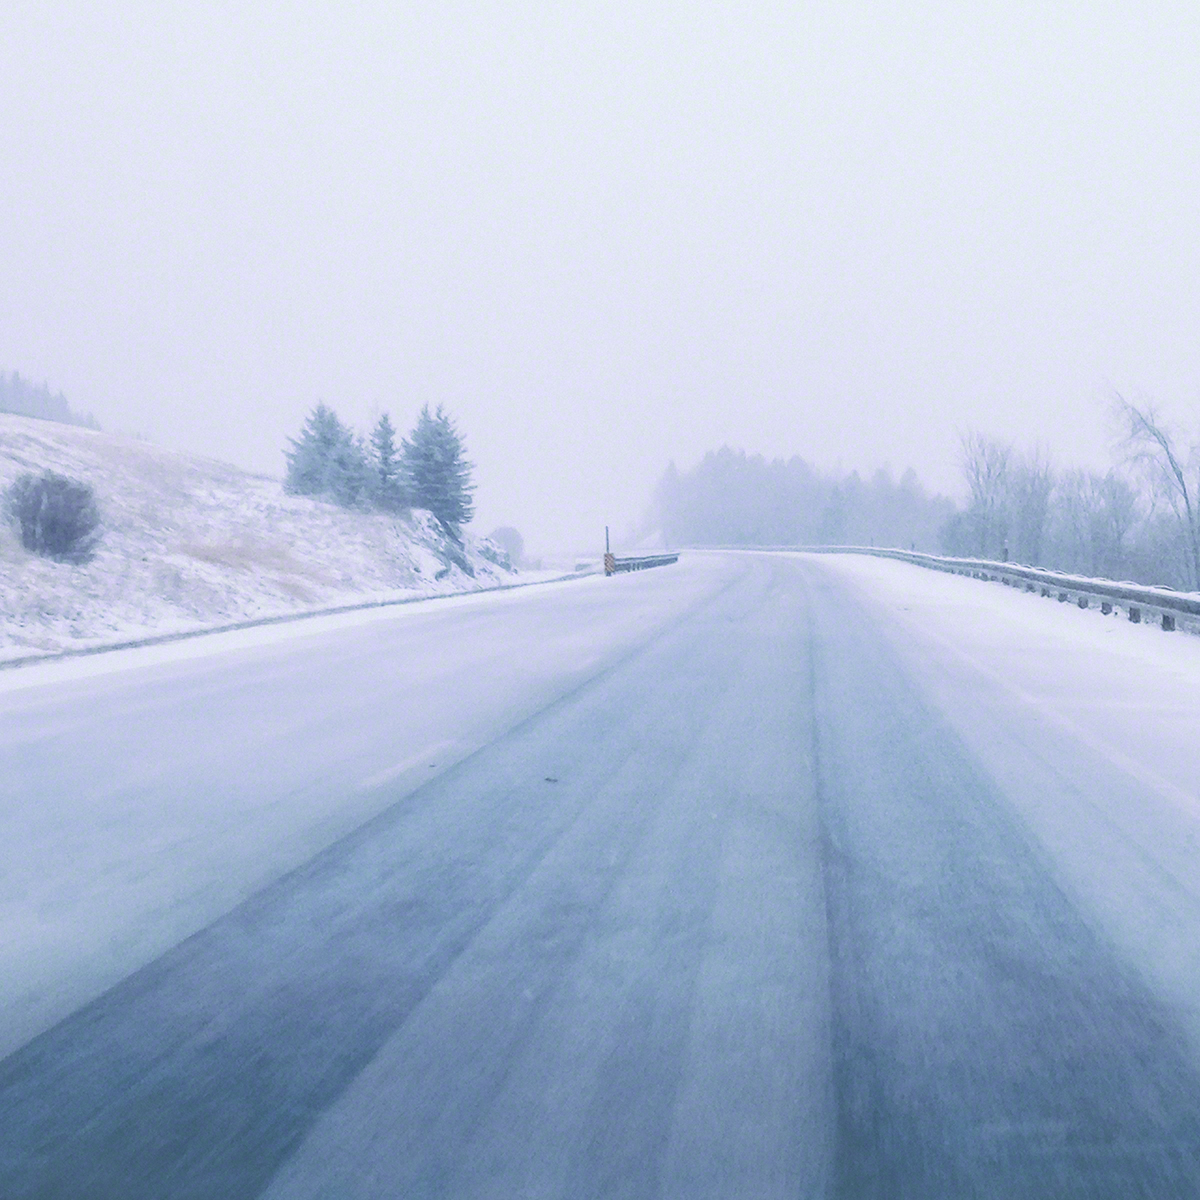 Empty, snowy highway